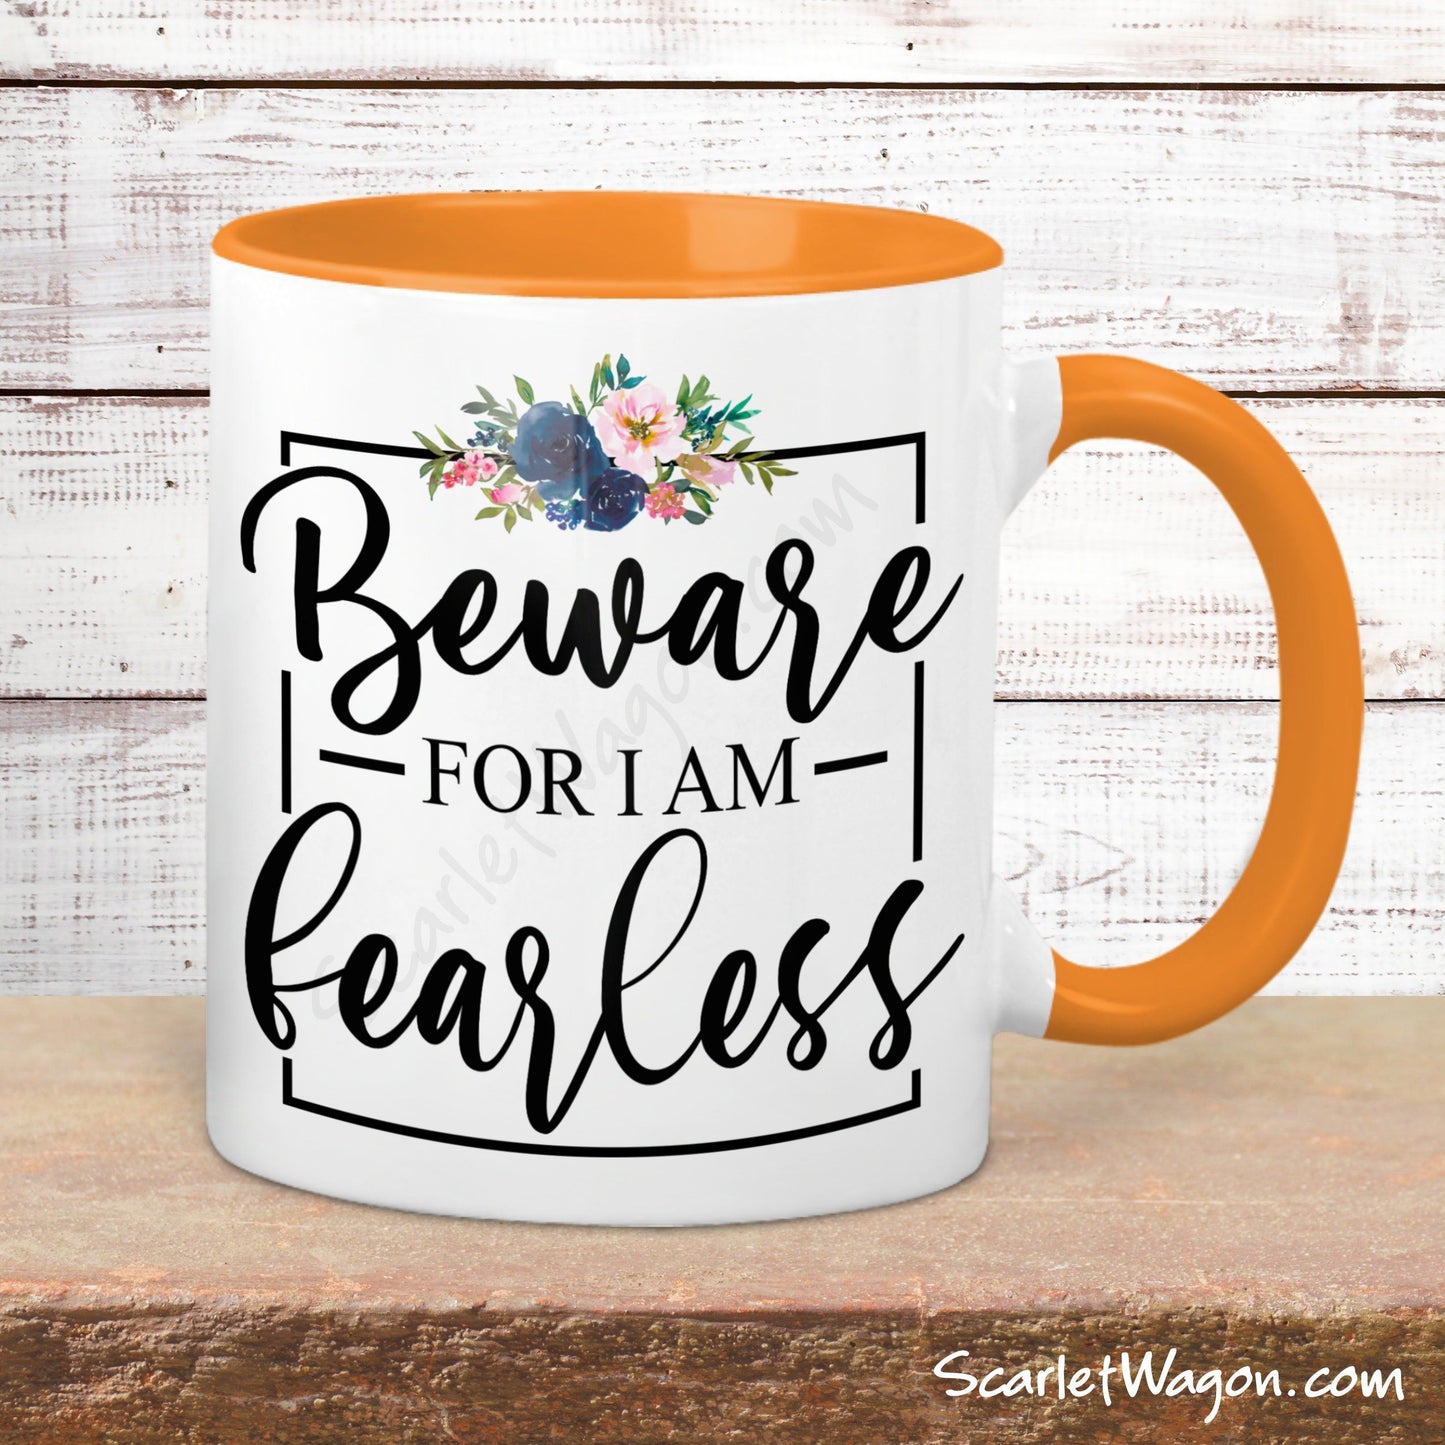 Beware for I am Fearless Coffee Mug mug The Scarlet Wagon Boutique 11 ounce Orange 